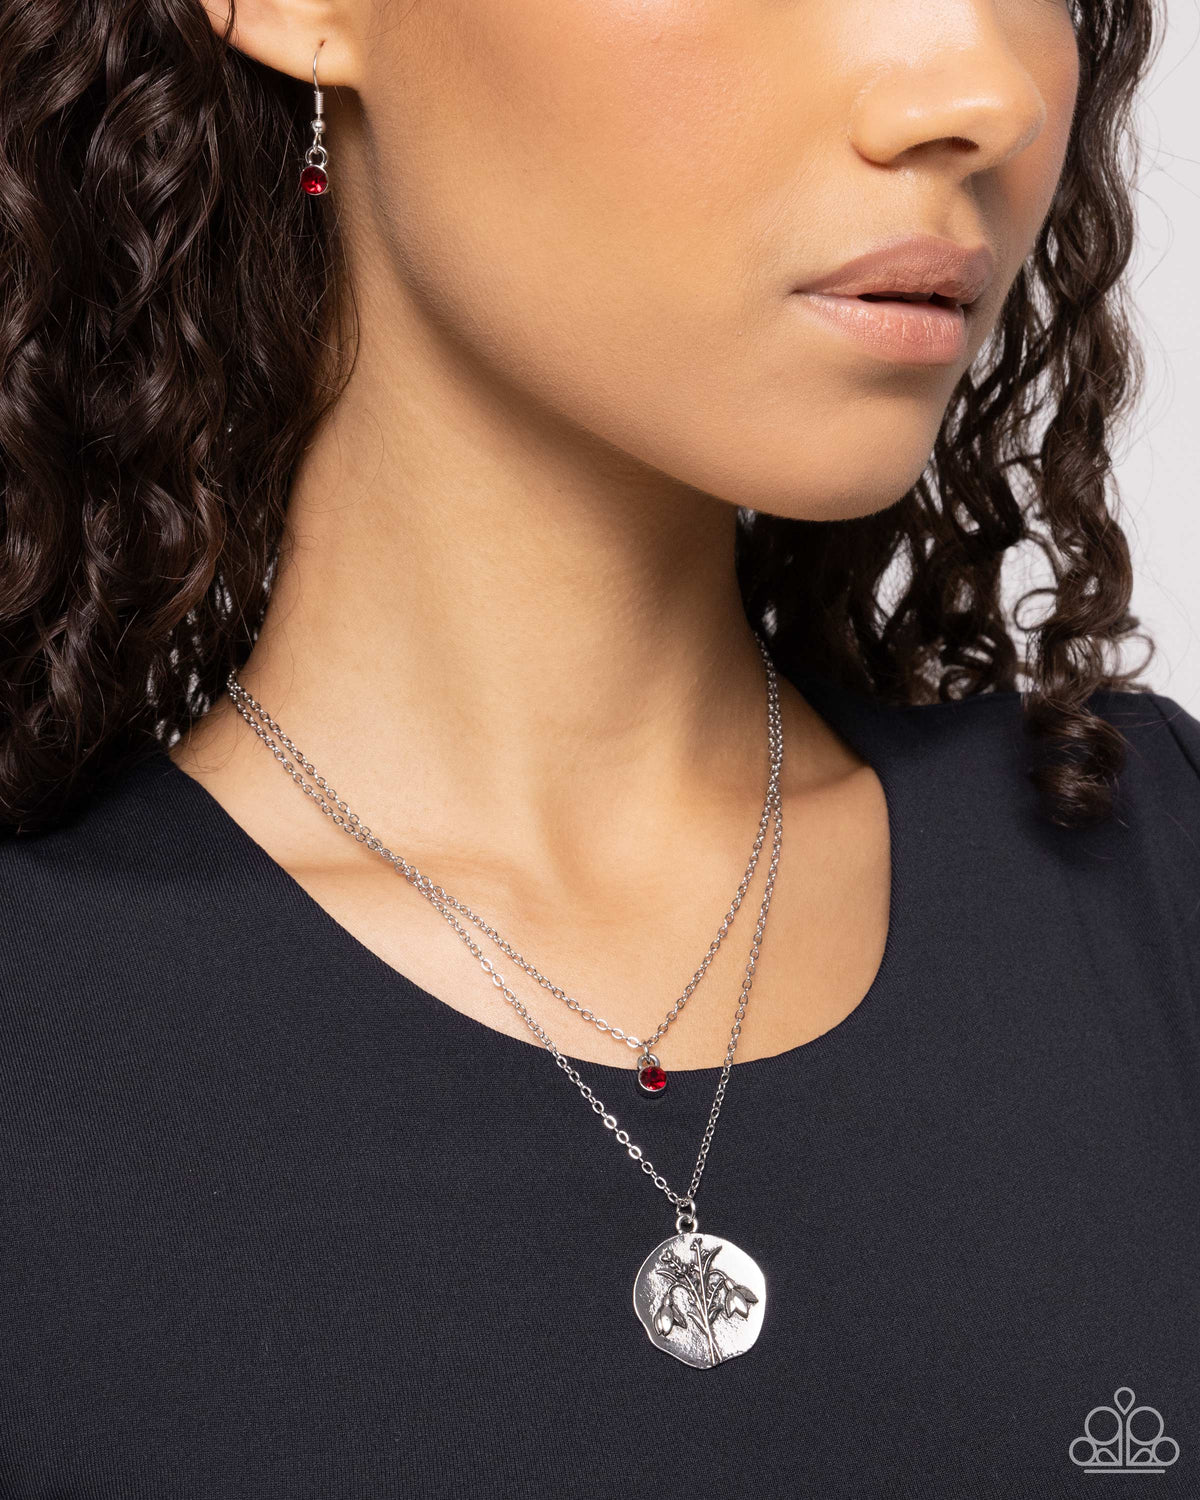 Birthstone Beauty (January) Garnet Red Rhinestone Necklace - Paparazzi Accessories-on model - CarasShop.com - $5 Jewelry by Cara Jewels